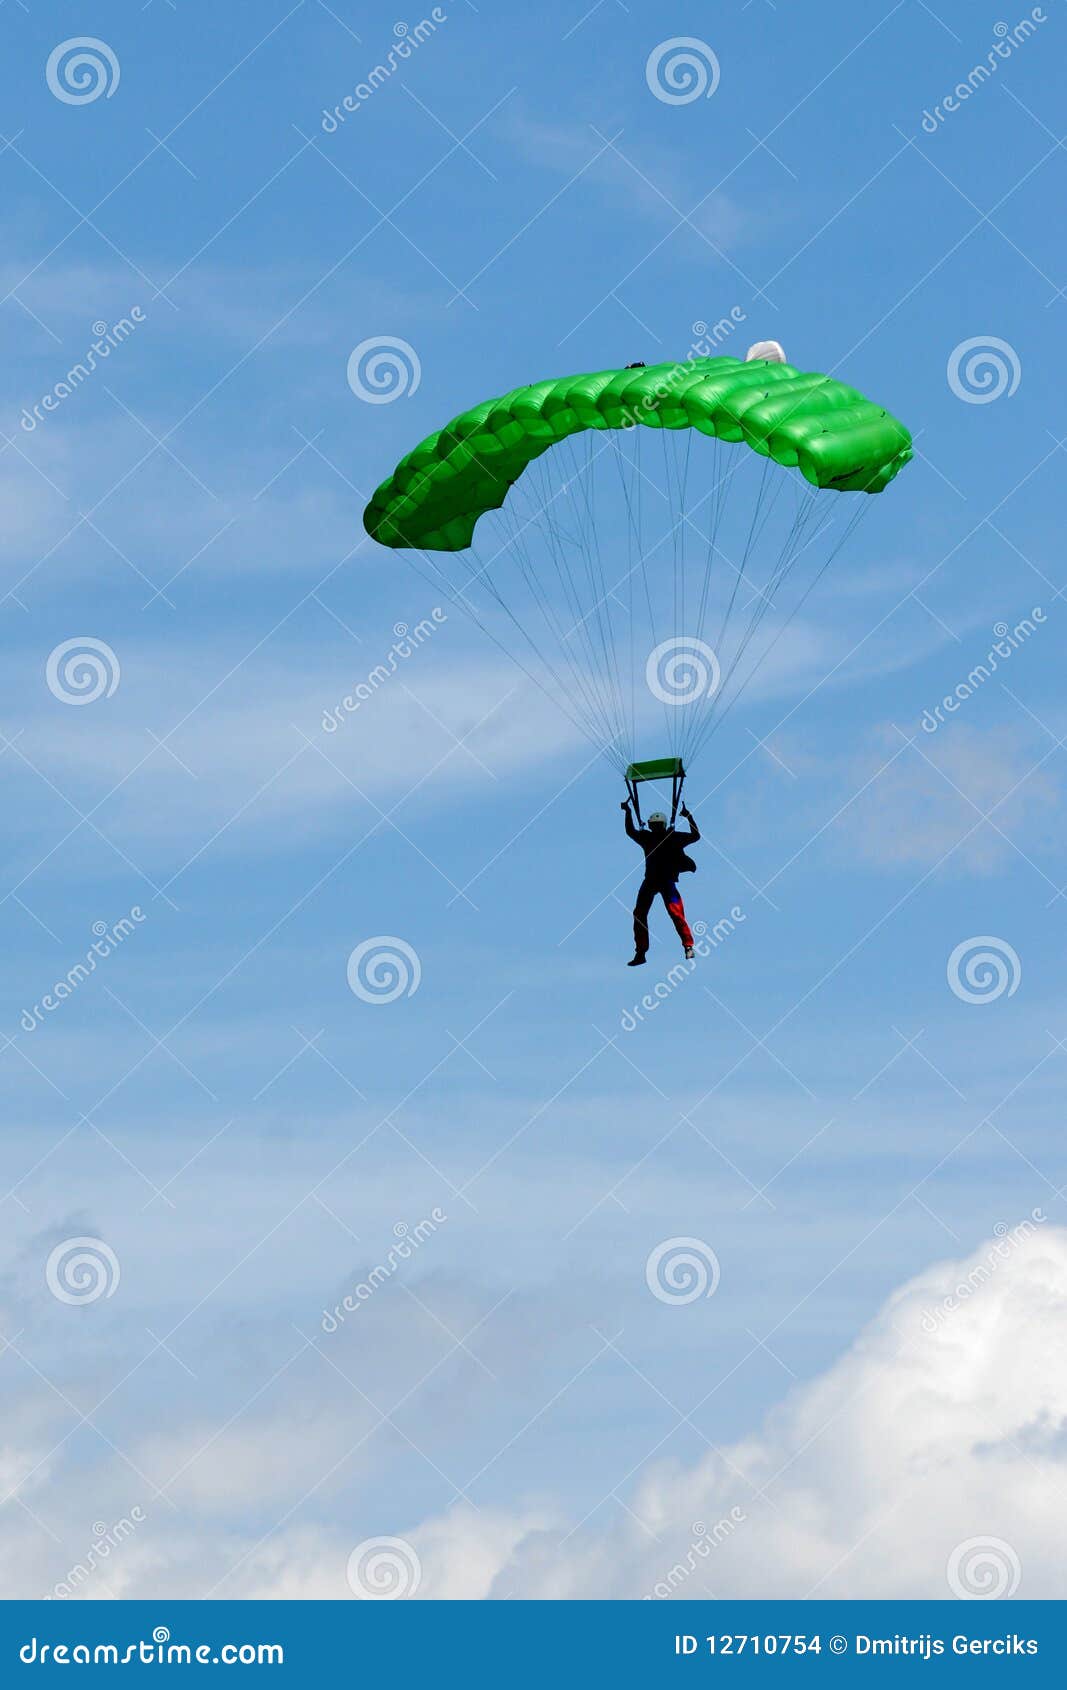 extreem sports. parachuting